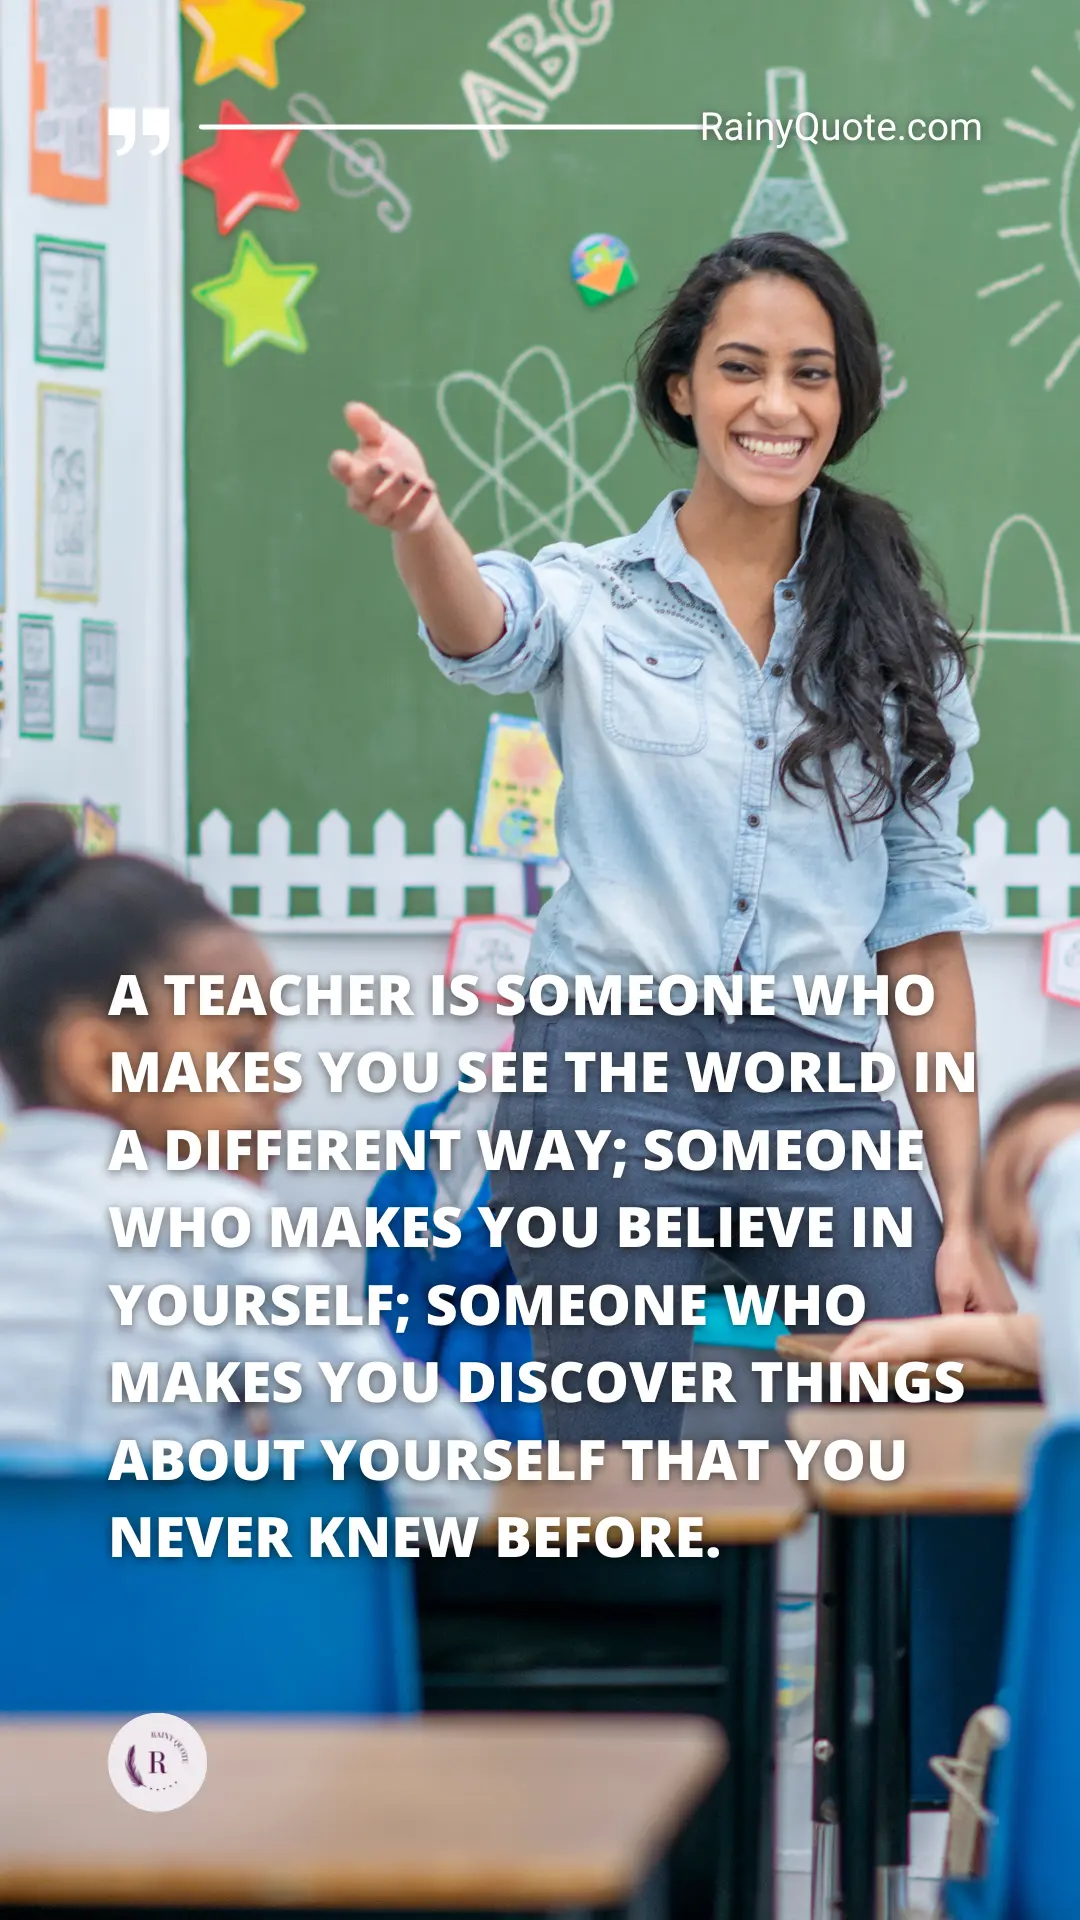 Teacher Day Quotes